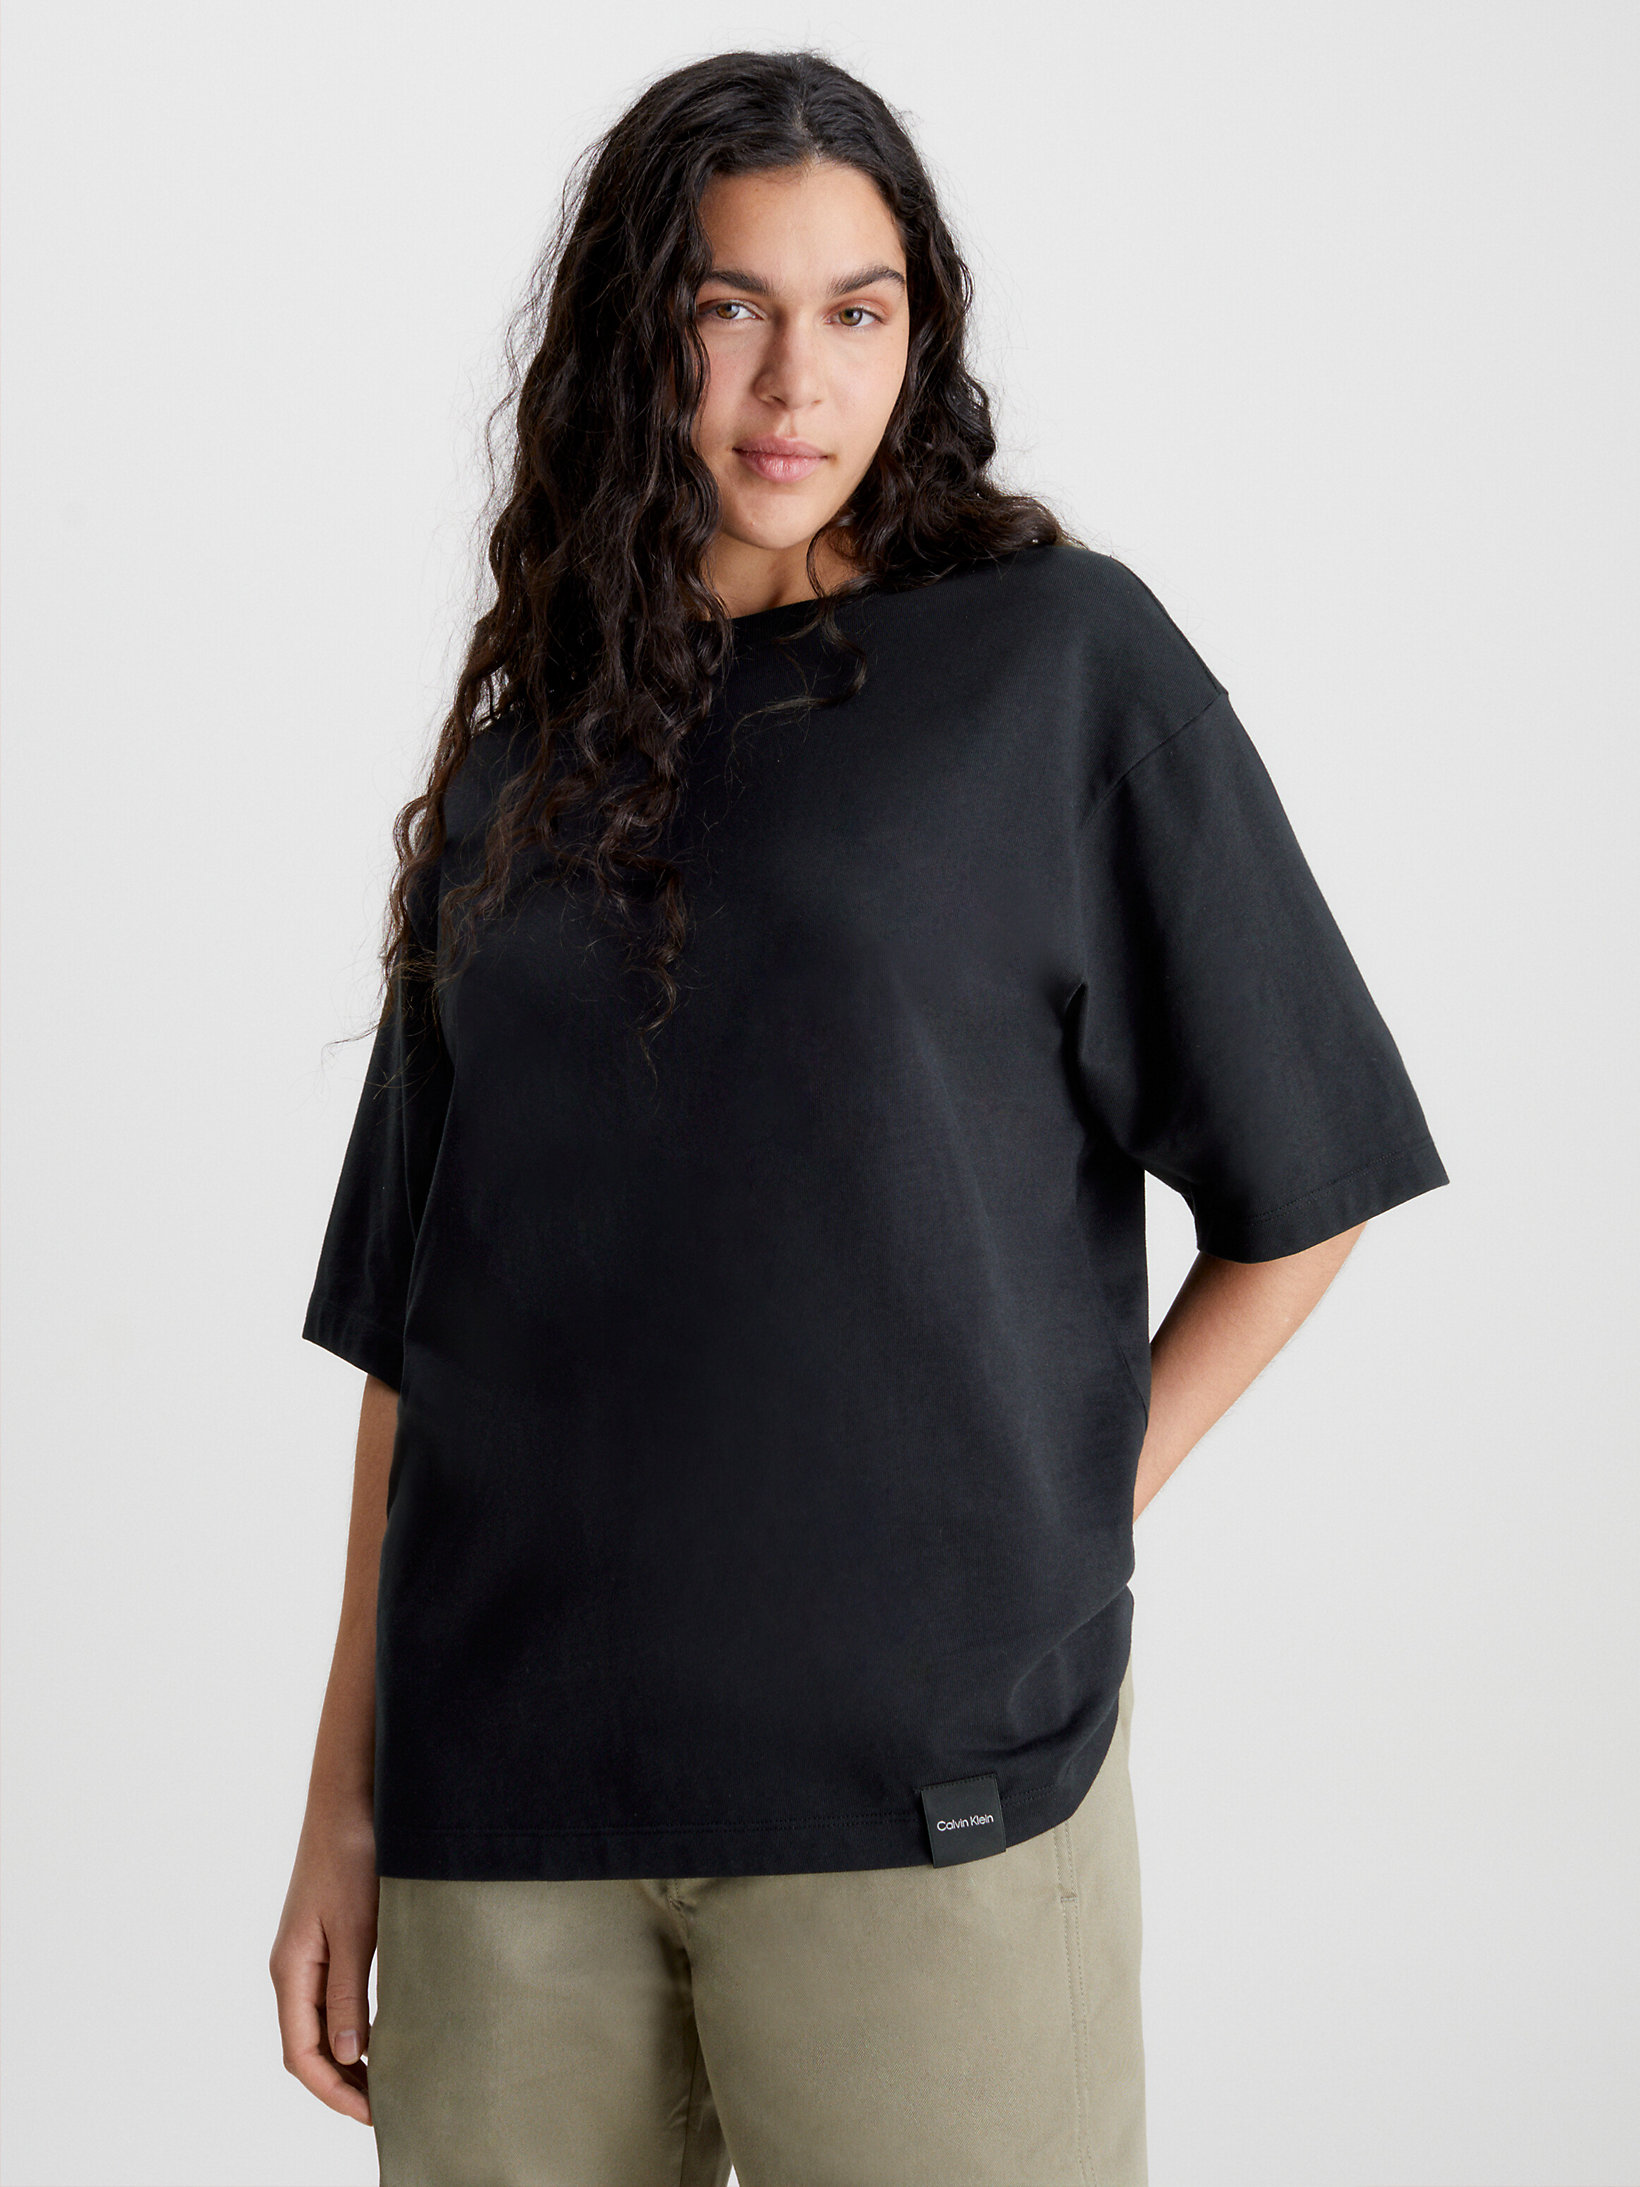 Black Beauty Unisex Relaxed T-Shirt - CK Standards undefined men Calvin Klein